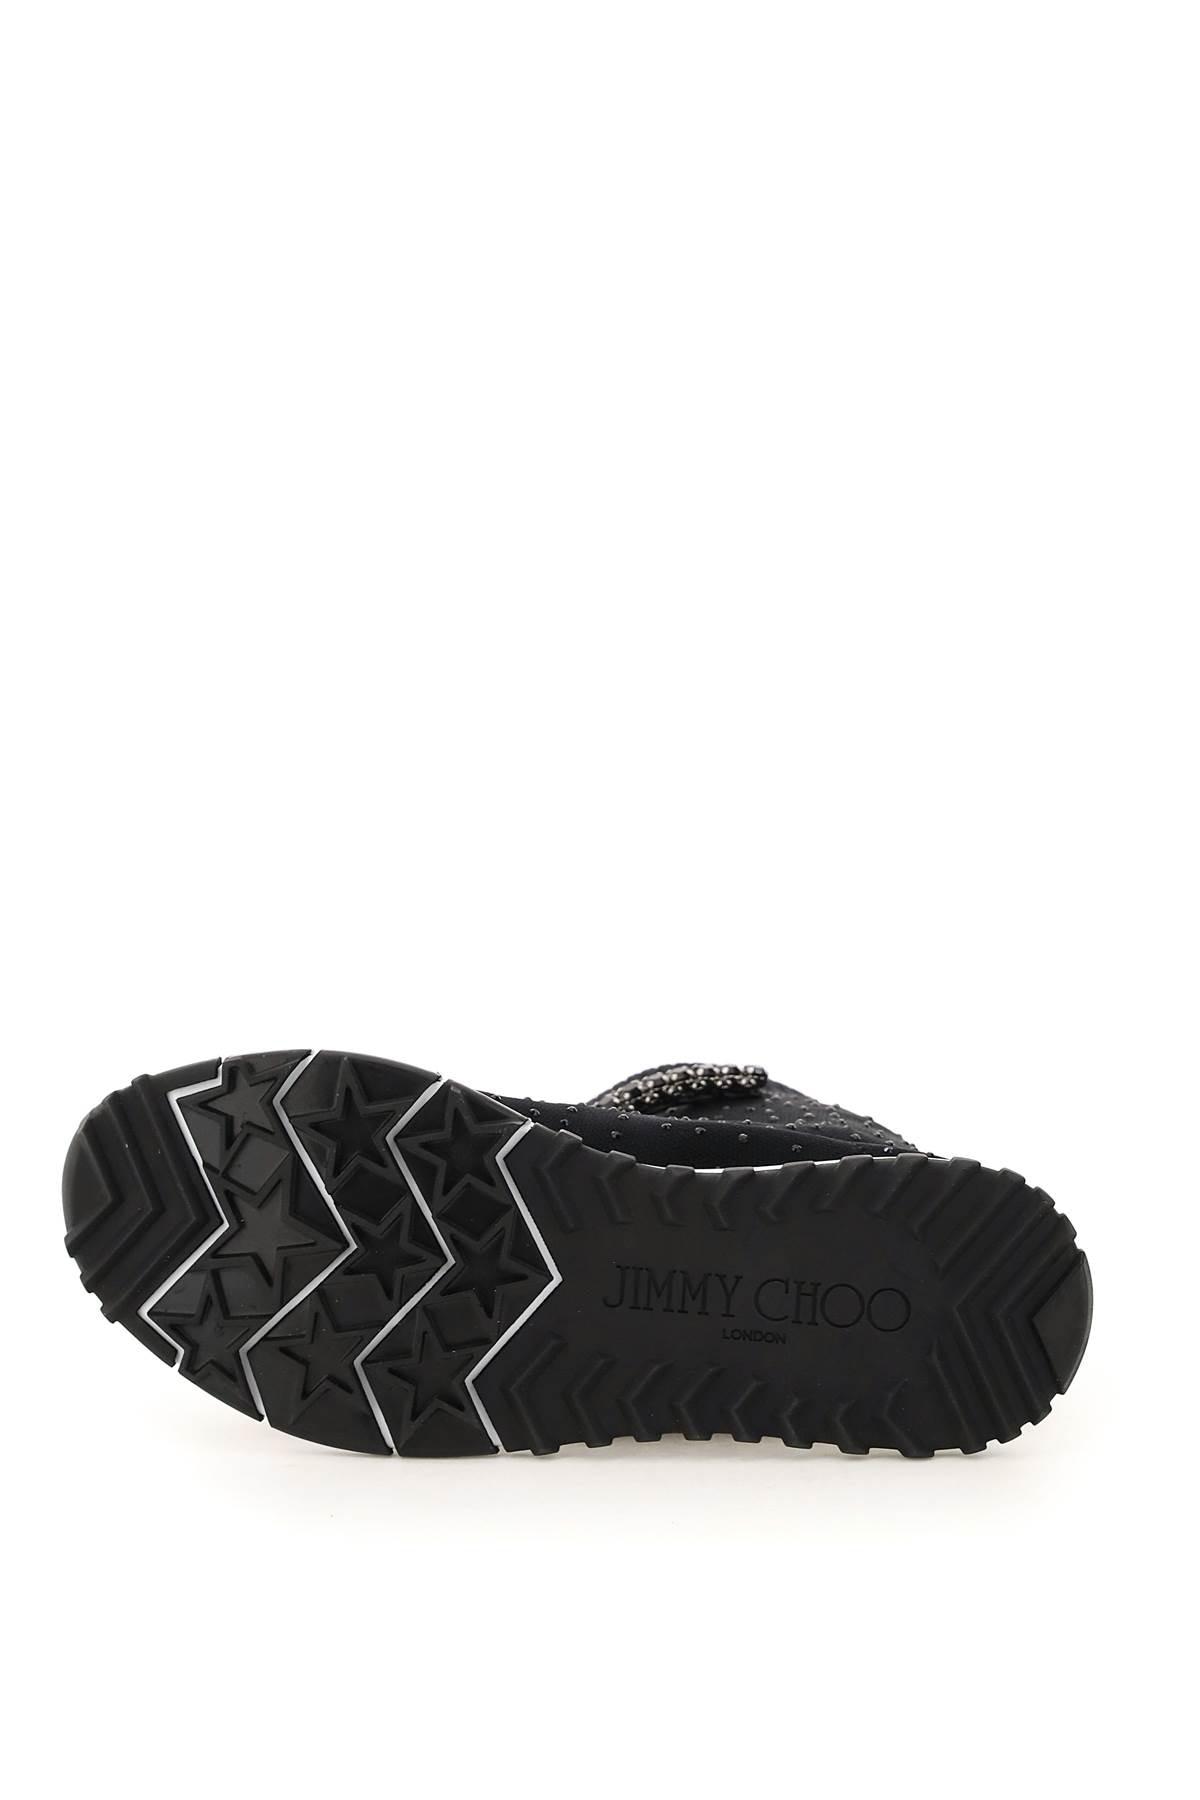 Jimmy Choo Leather Regena Sneakers in Black - Save 32% - Lyst